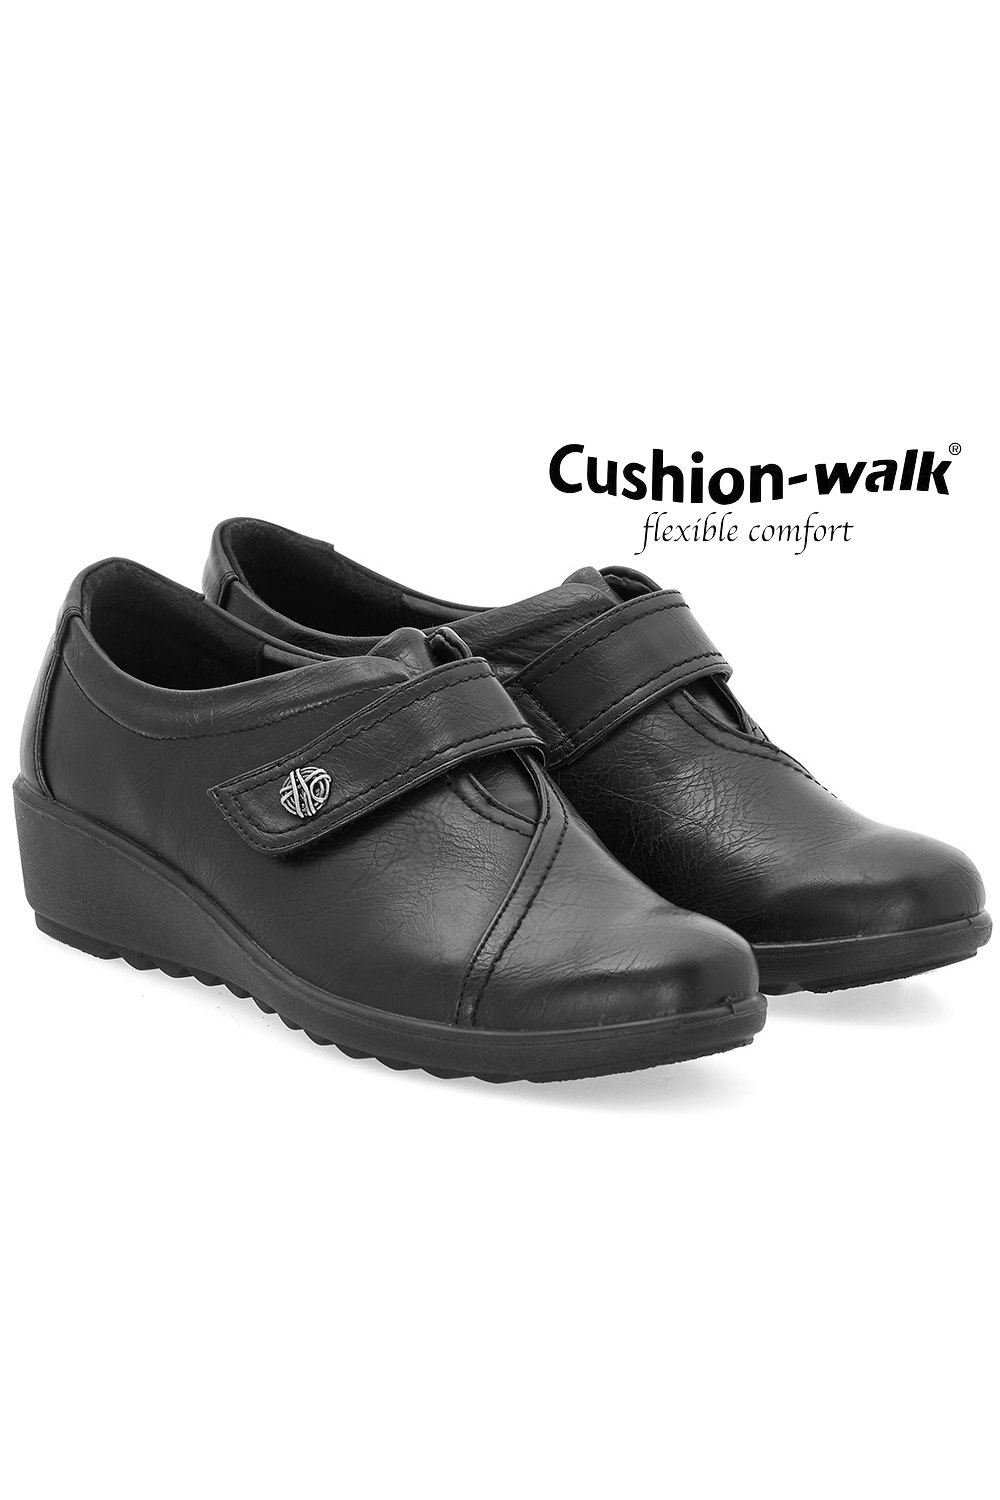 cushion walk black shoes